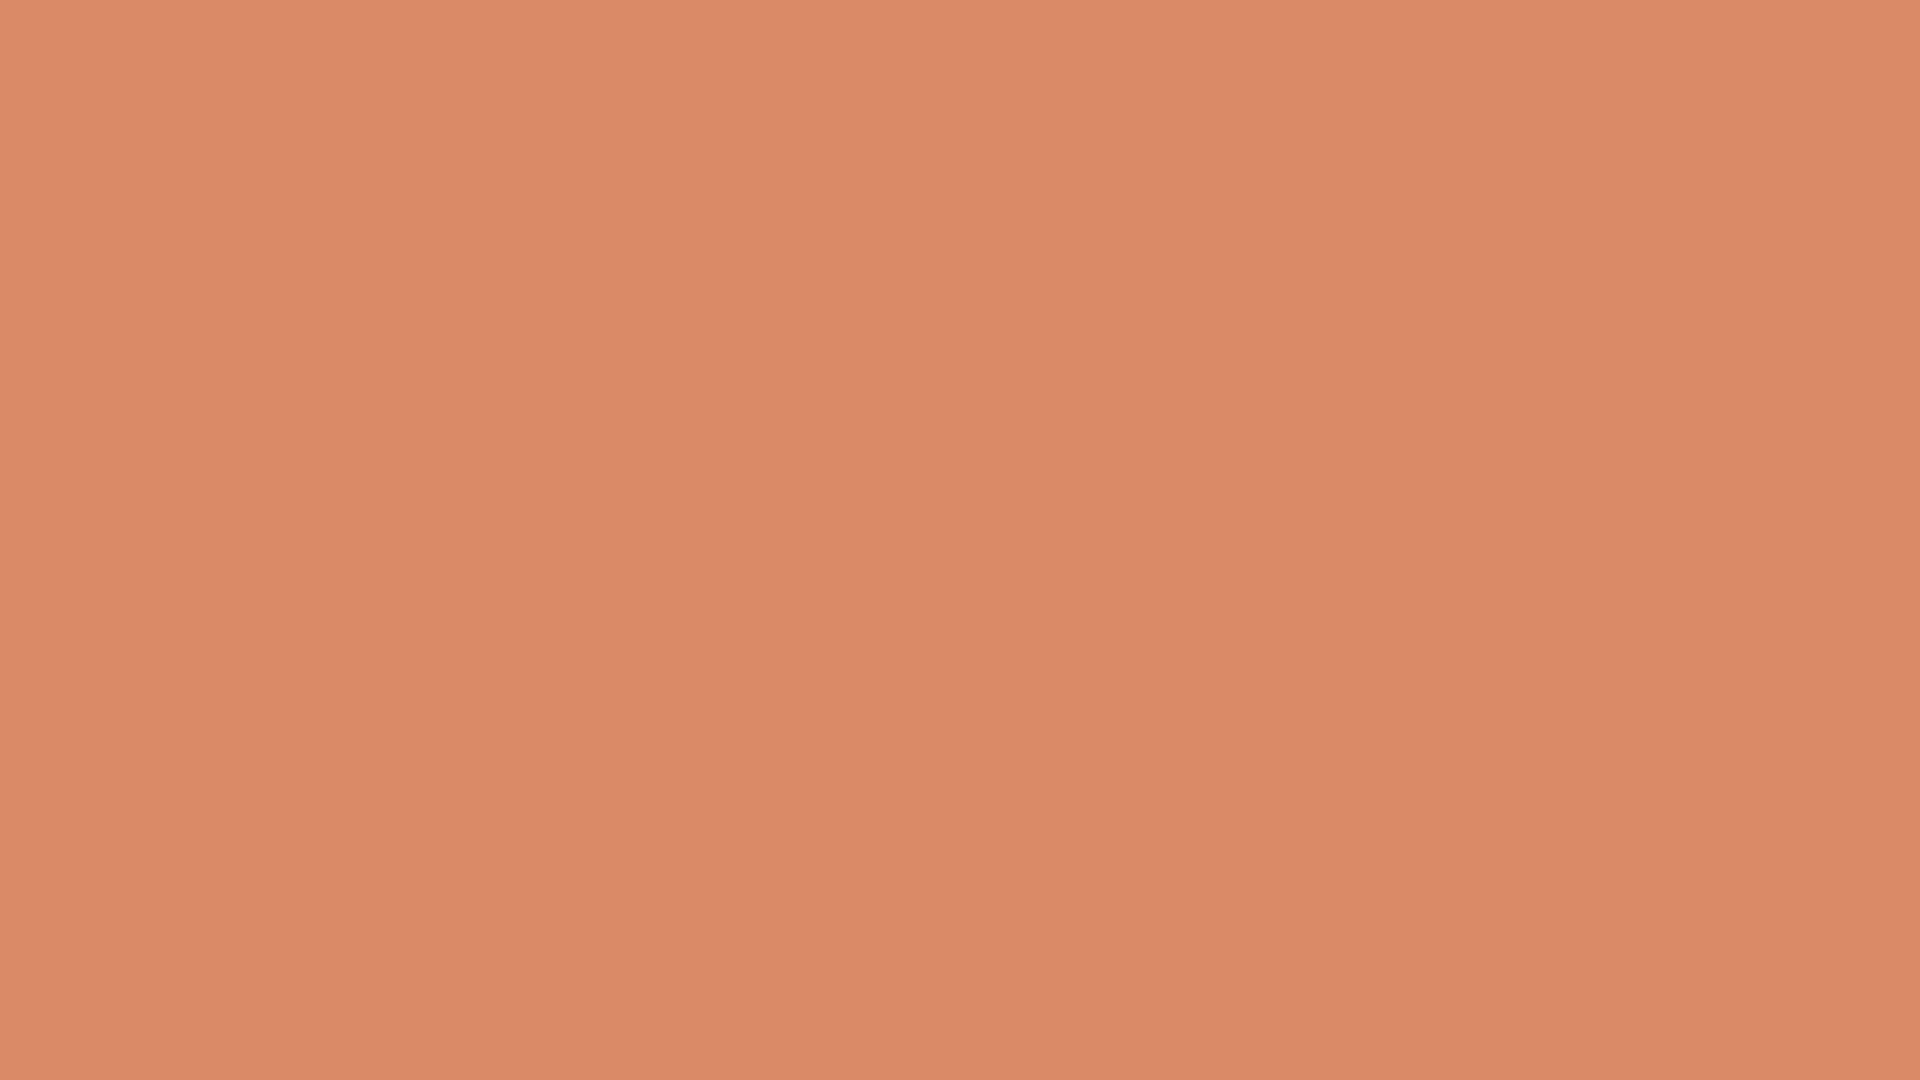 1920x1080 Pale Copper Solid Color Background